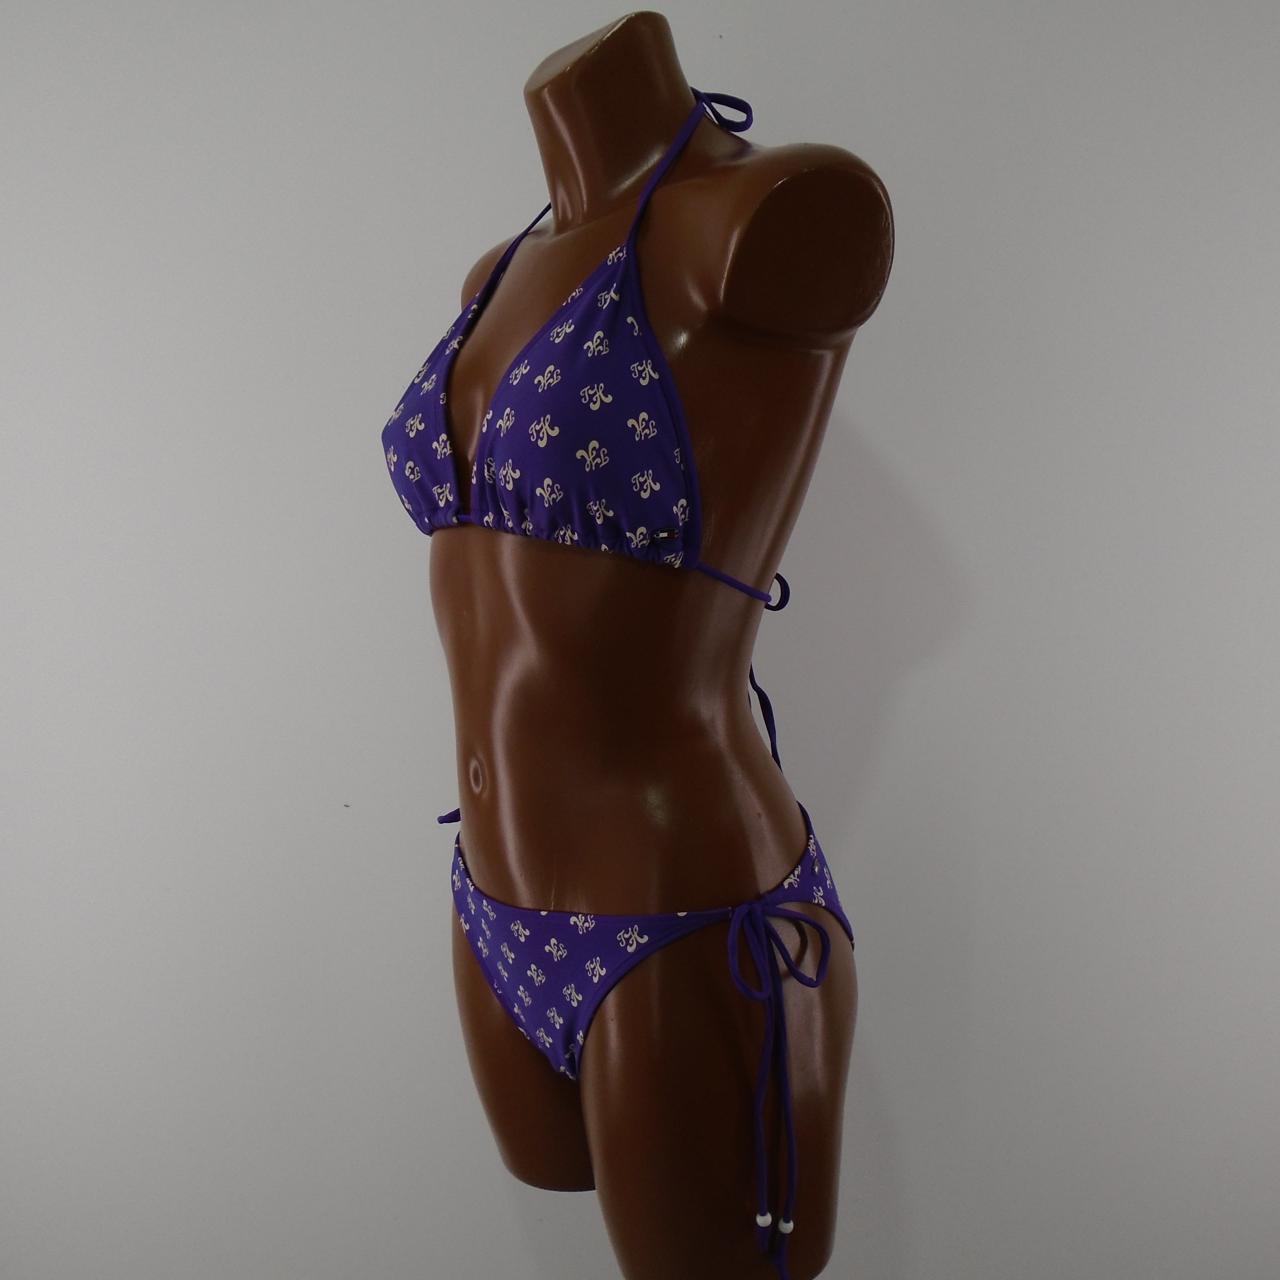 Damen-Badeanzug Tommy Hilfiger. Mehrfarbig. XL. Gebraucht. Sehr gut